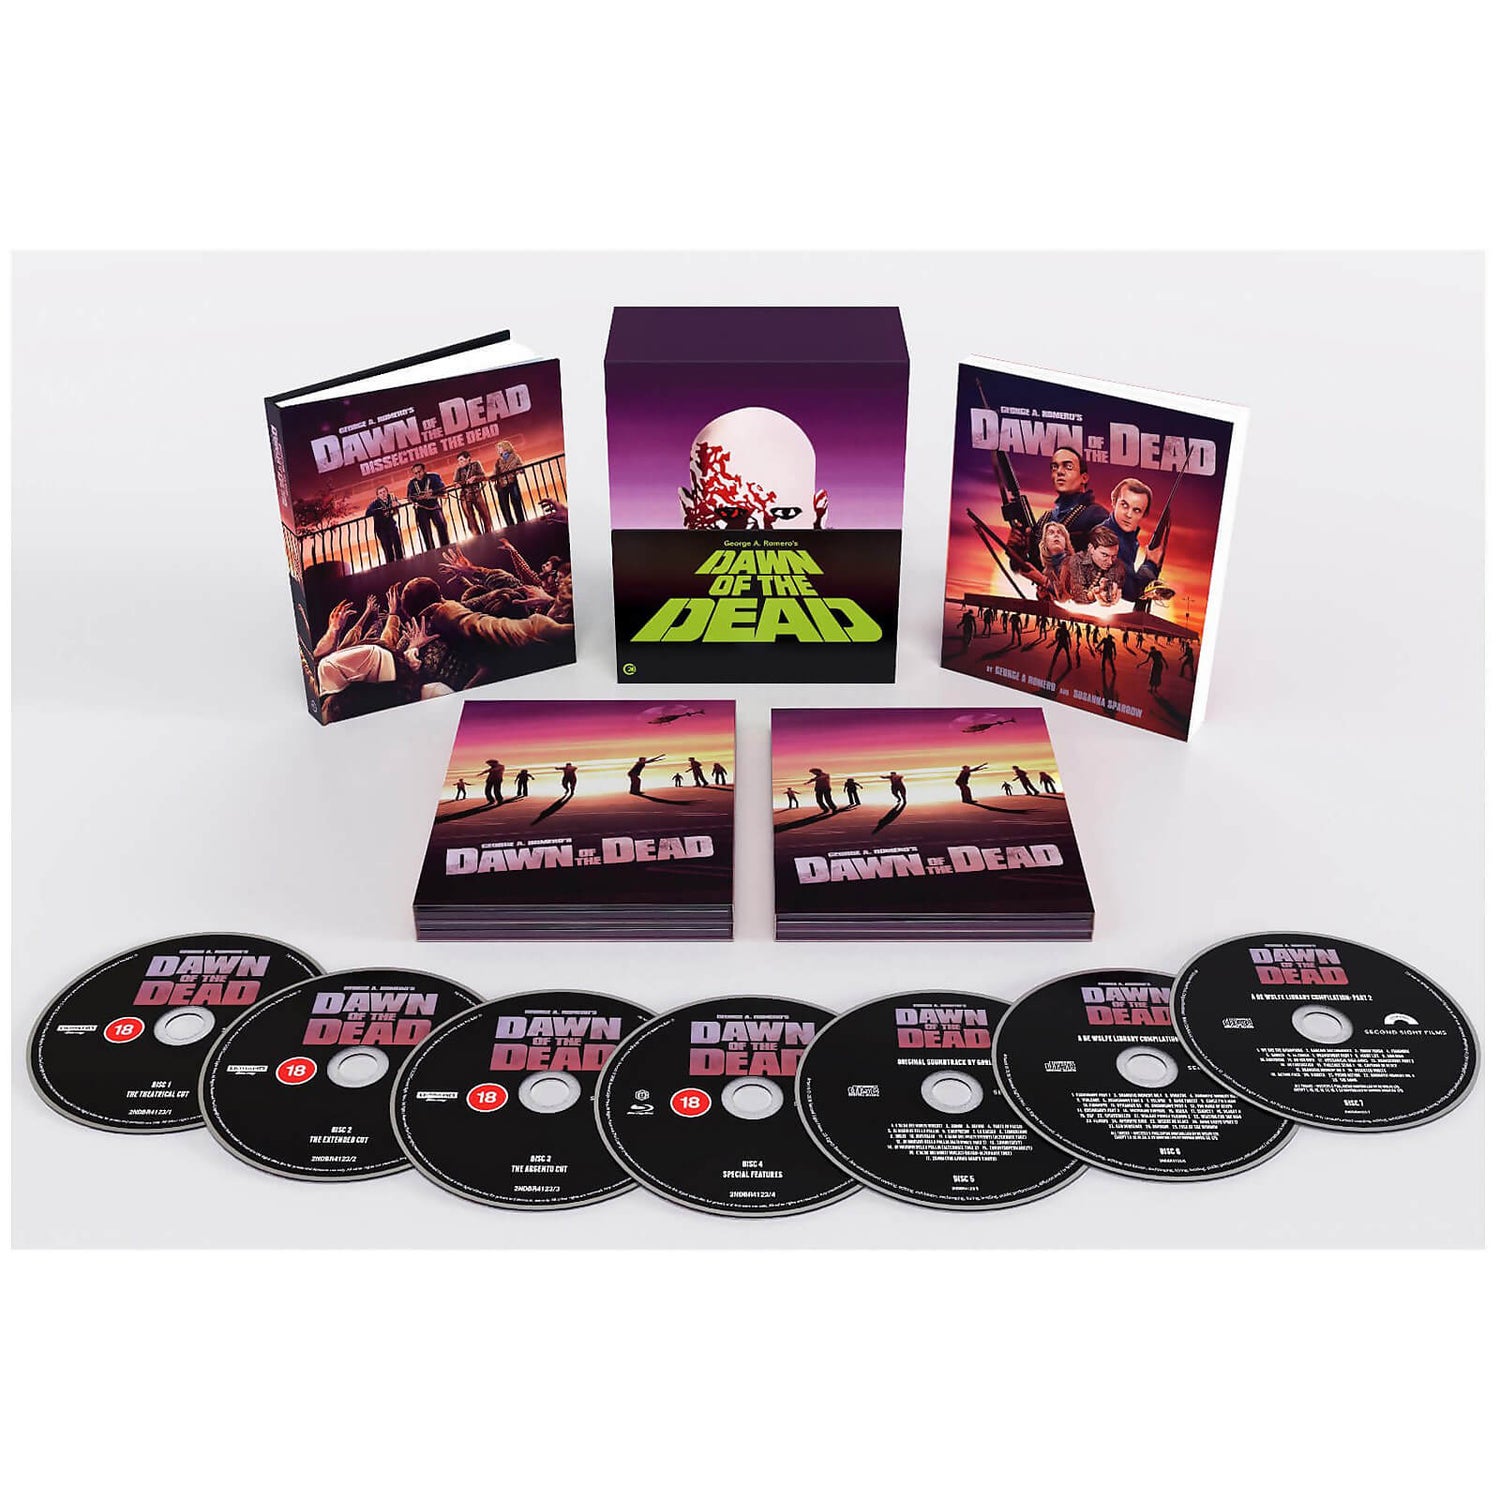 Aldnoah Zero Part 1 - Standard Blu-ray - Zavvi US